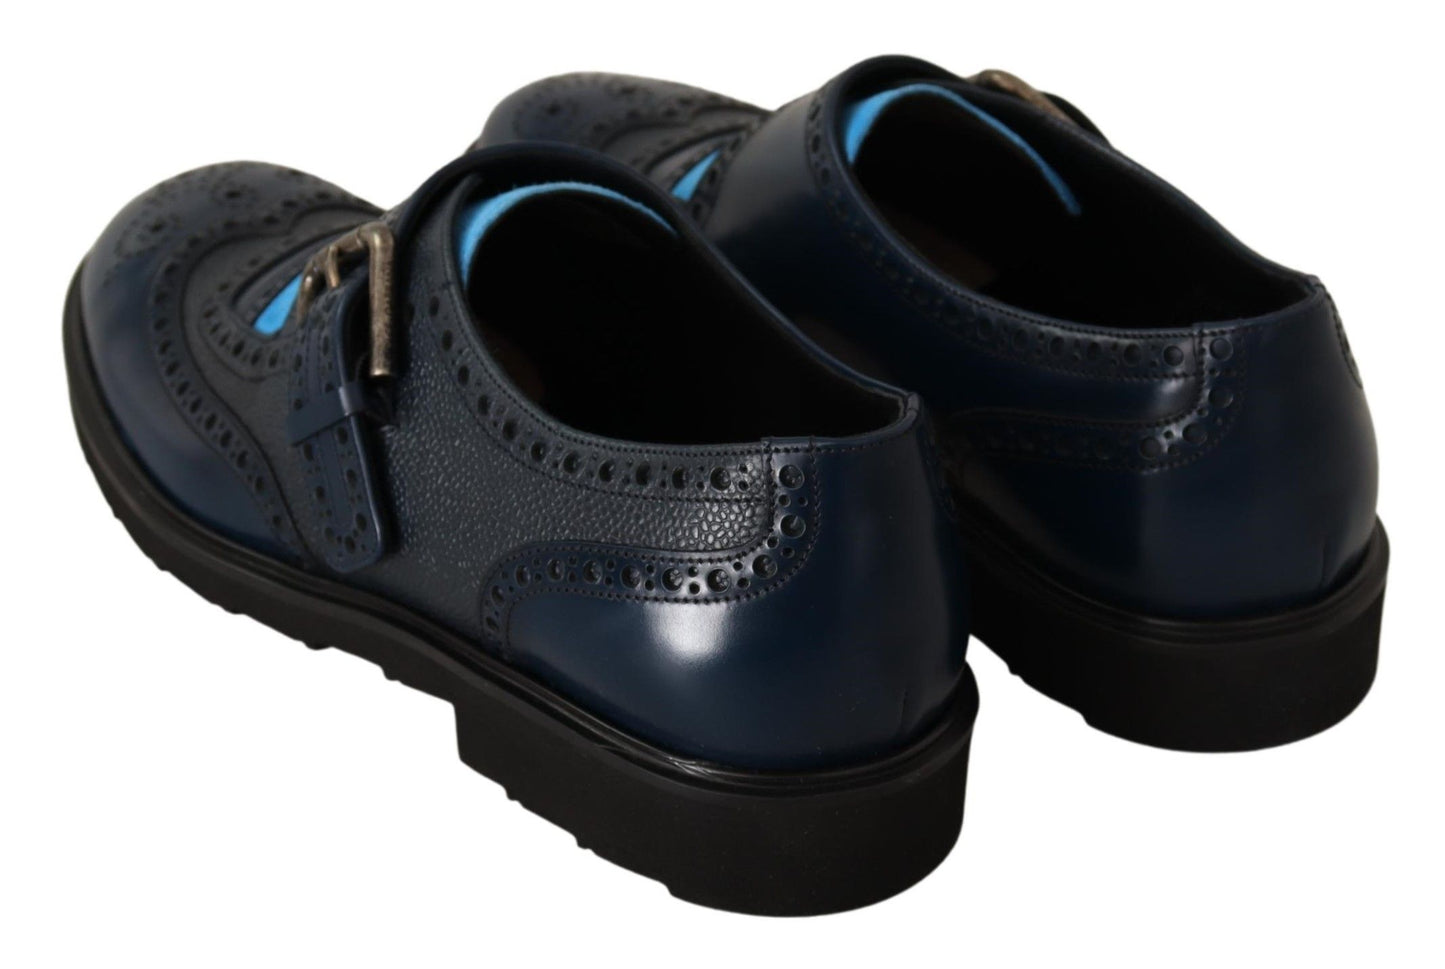 Elegant Blue Leather Monk Shoes